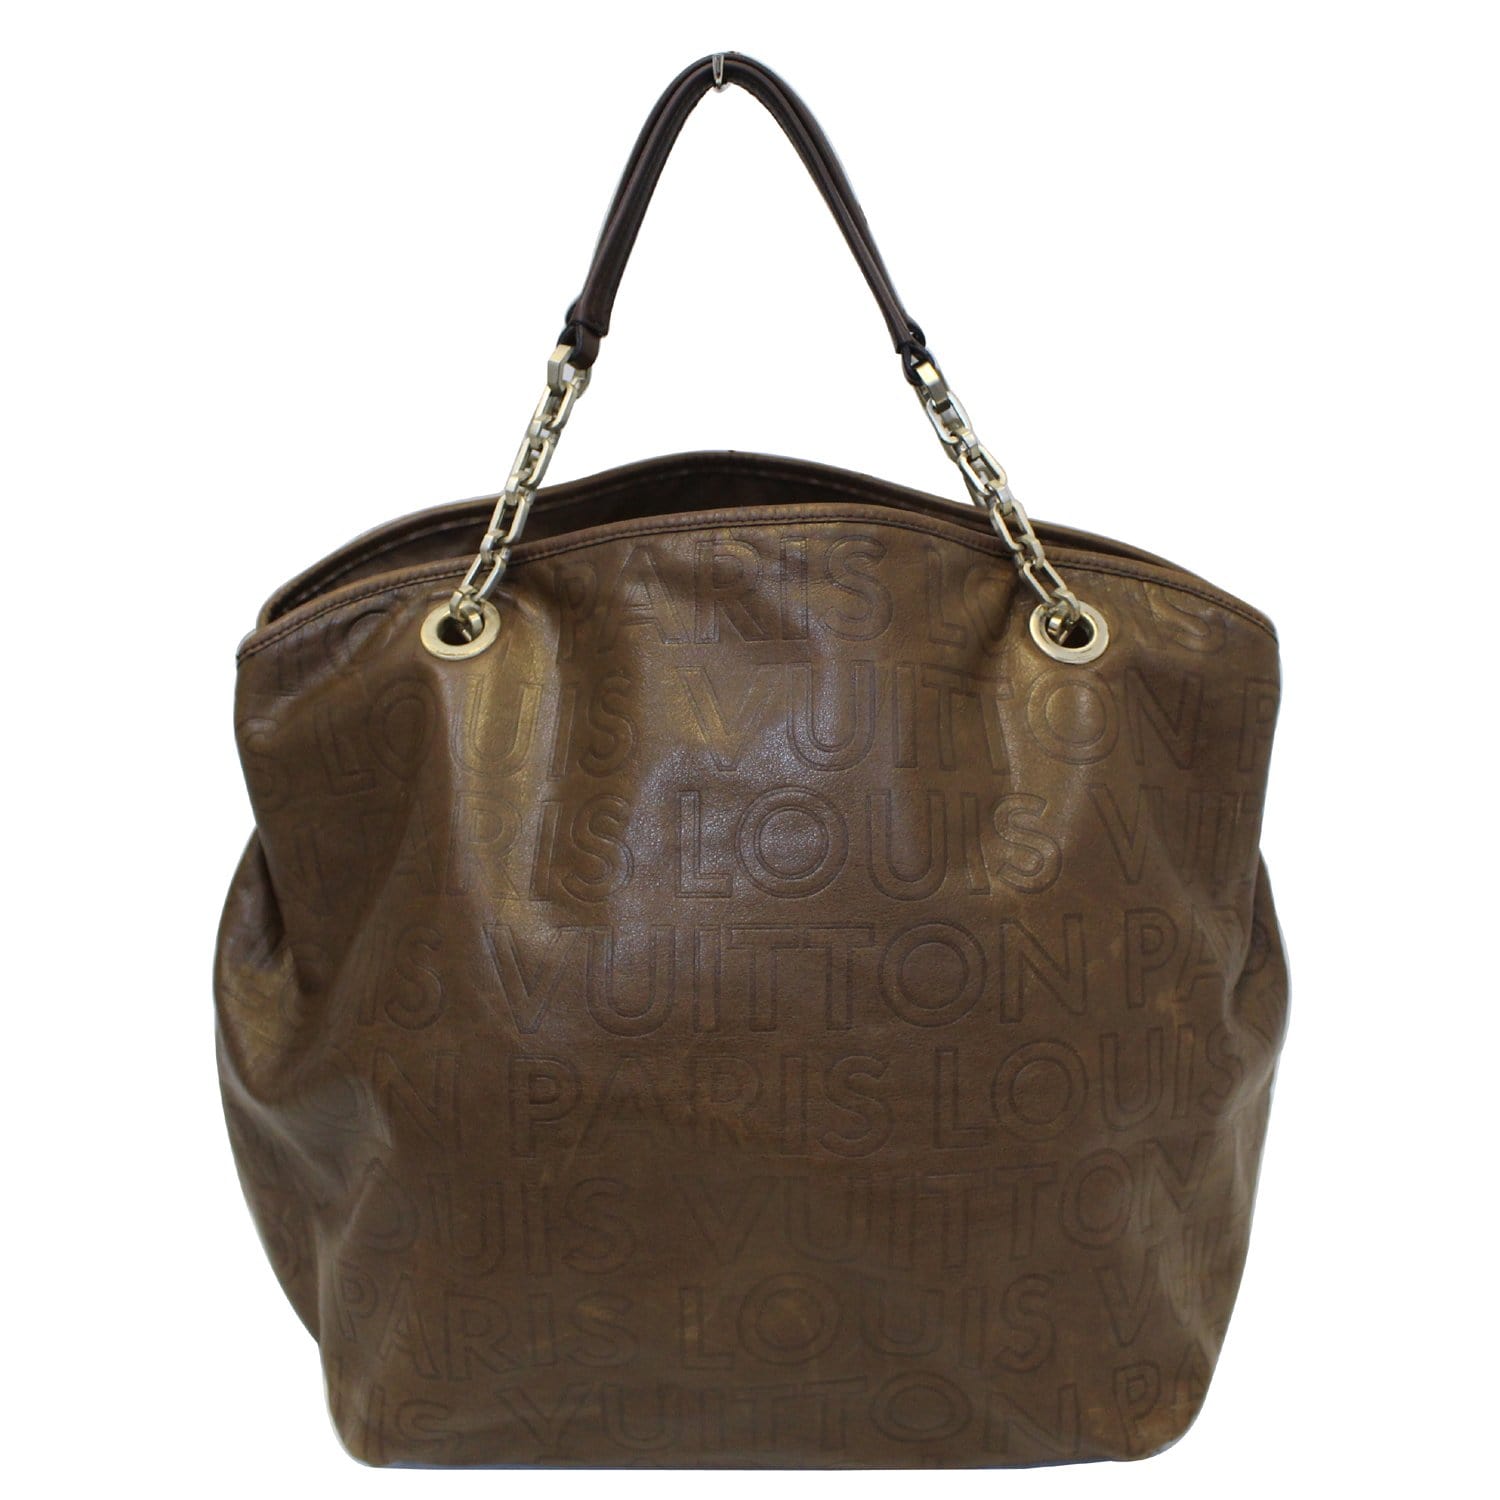 Where should I buy a Louis Vuitton handbag in Paris to get the